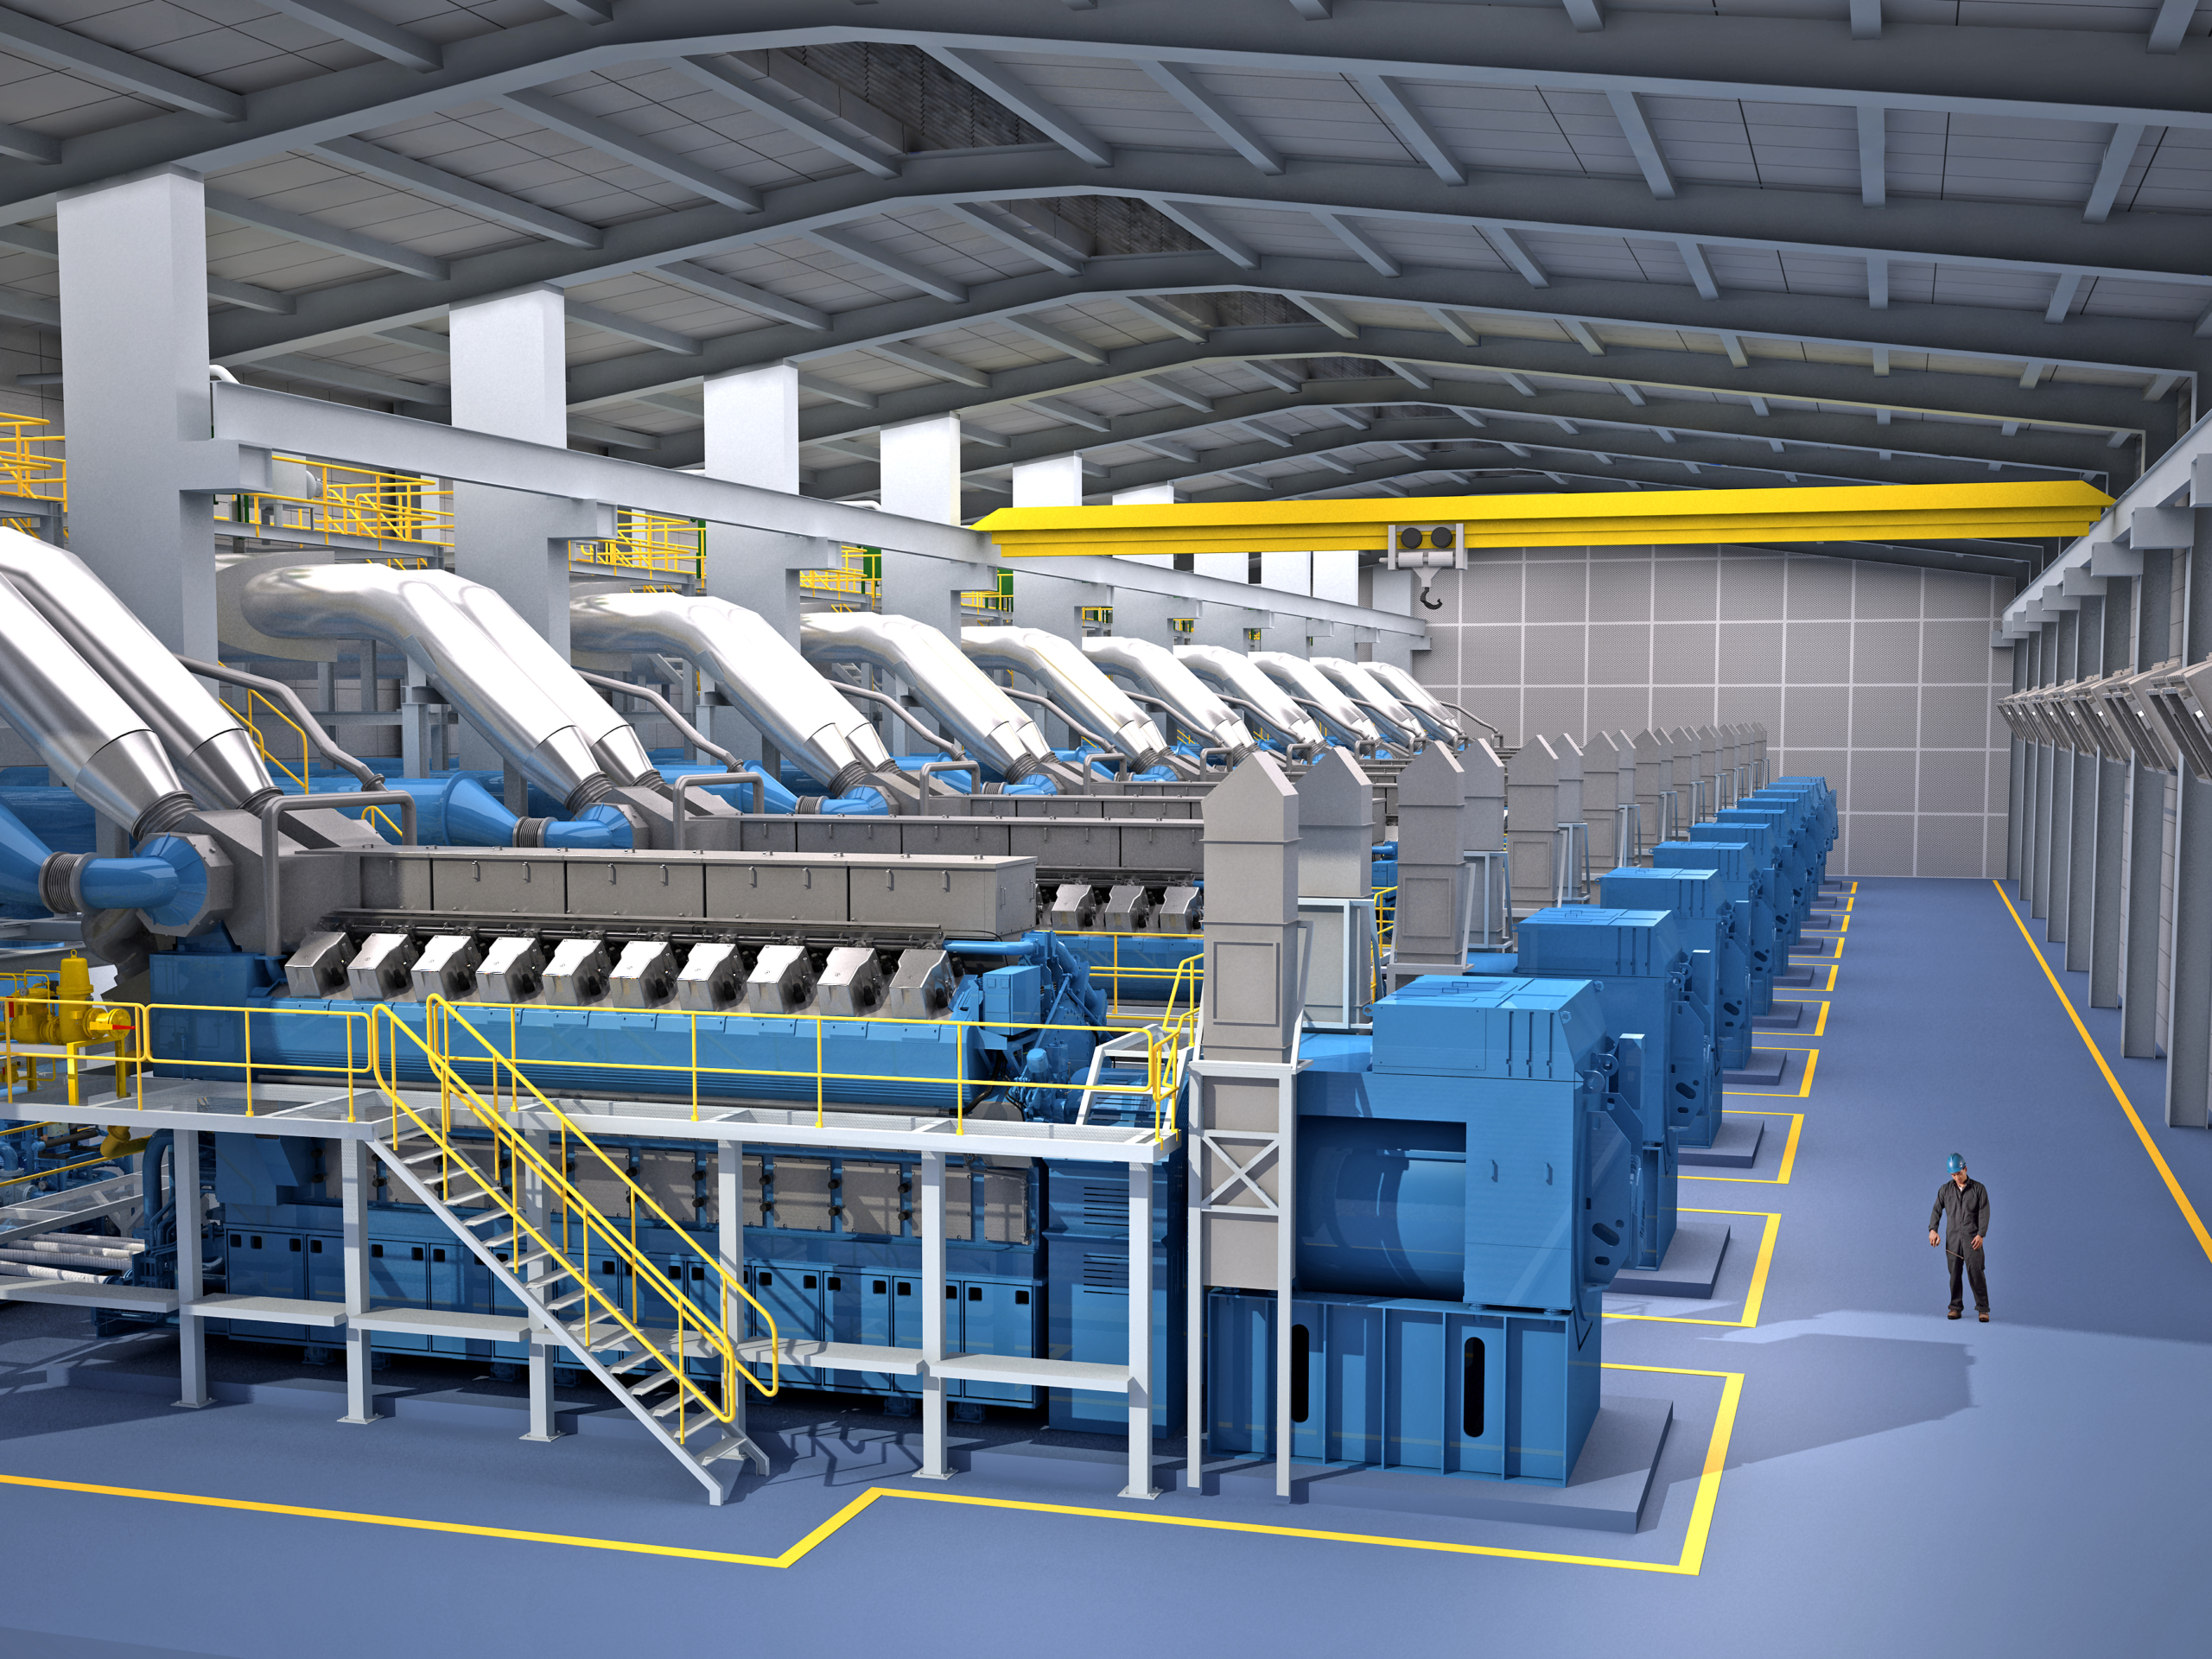 3D Rendering of Power Plant